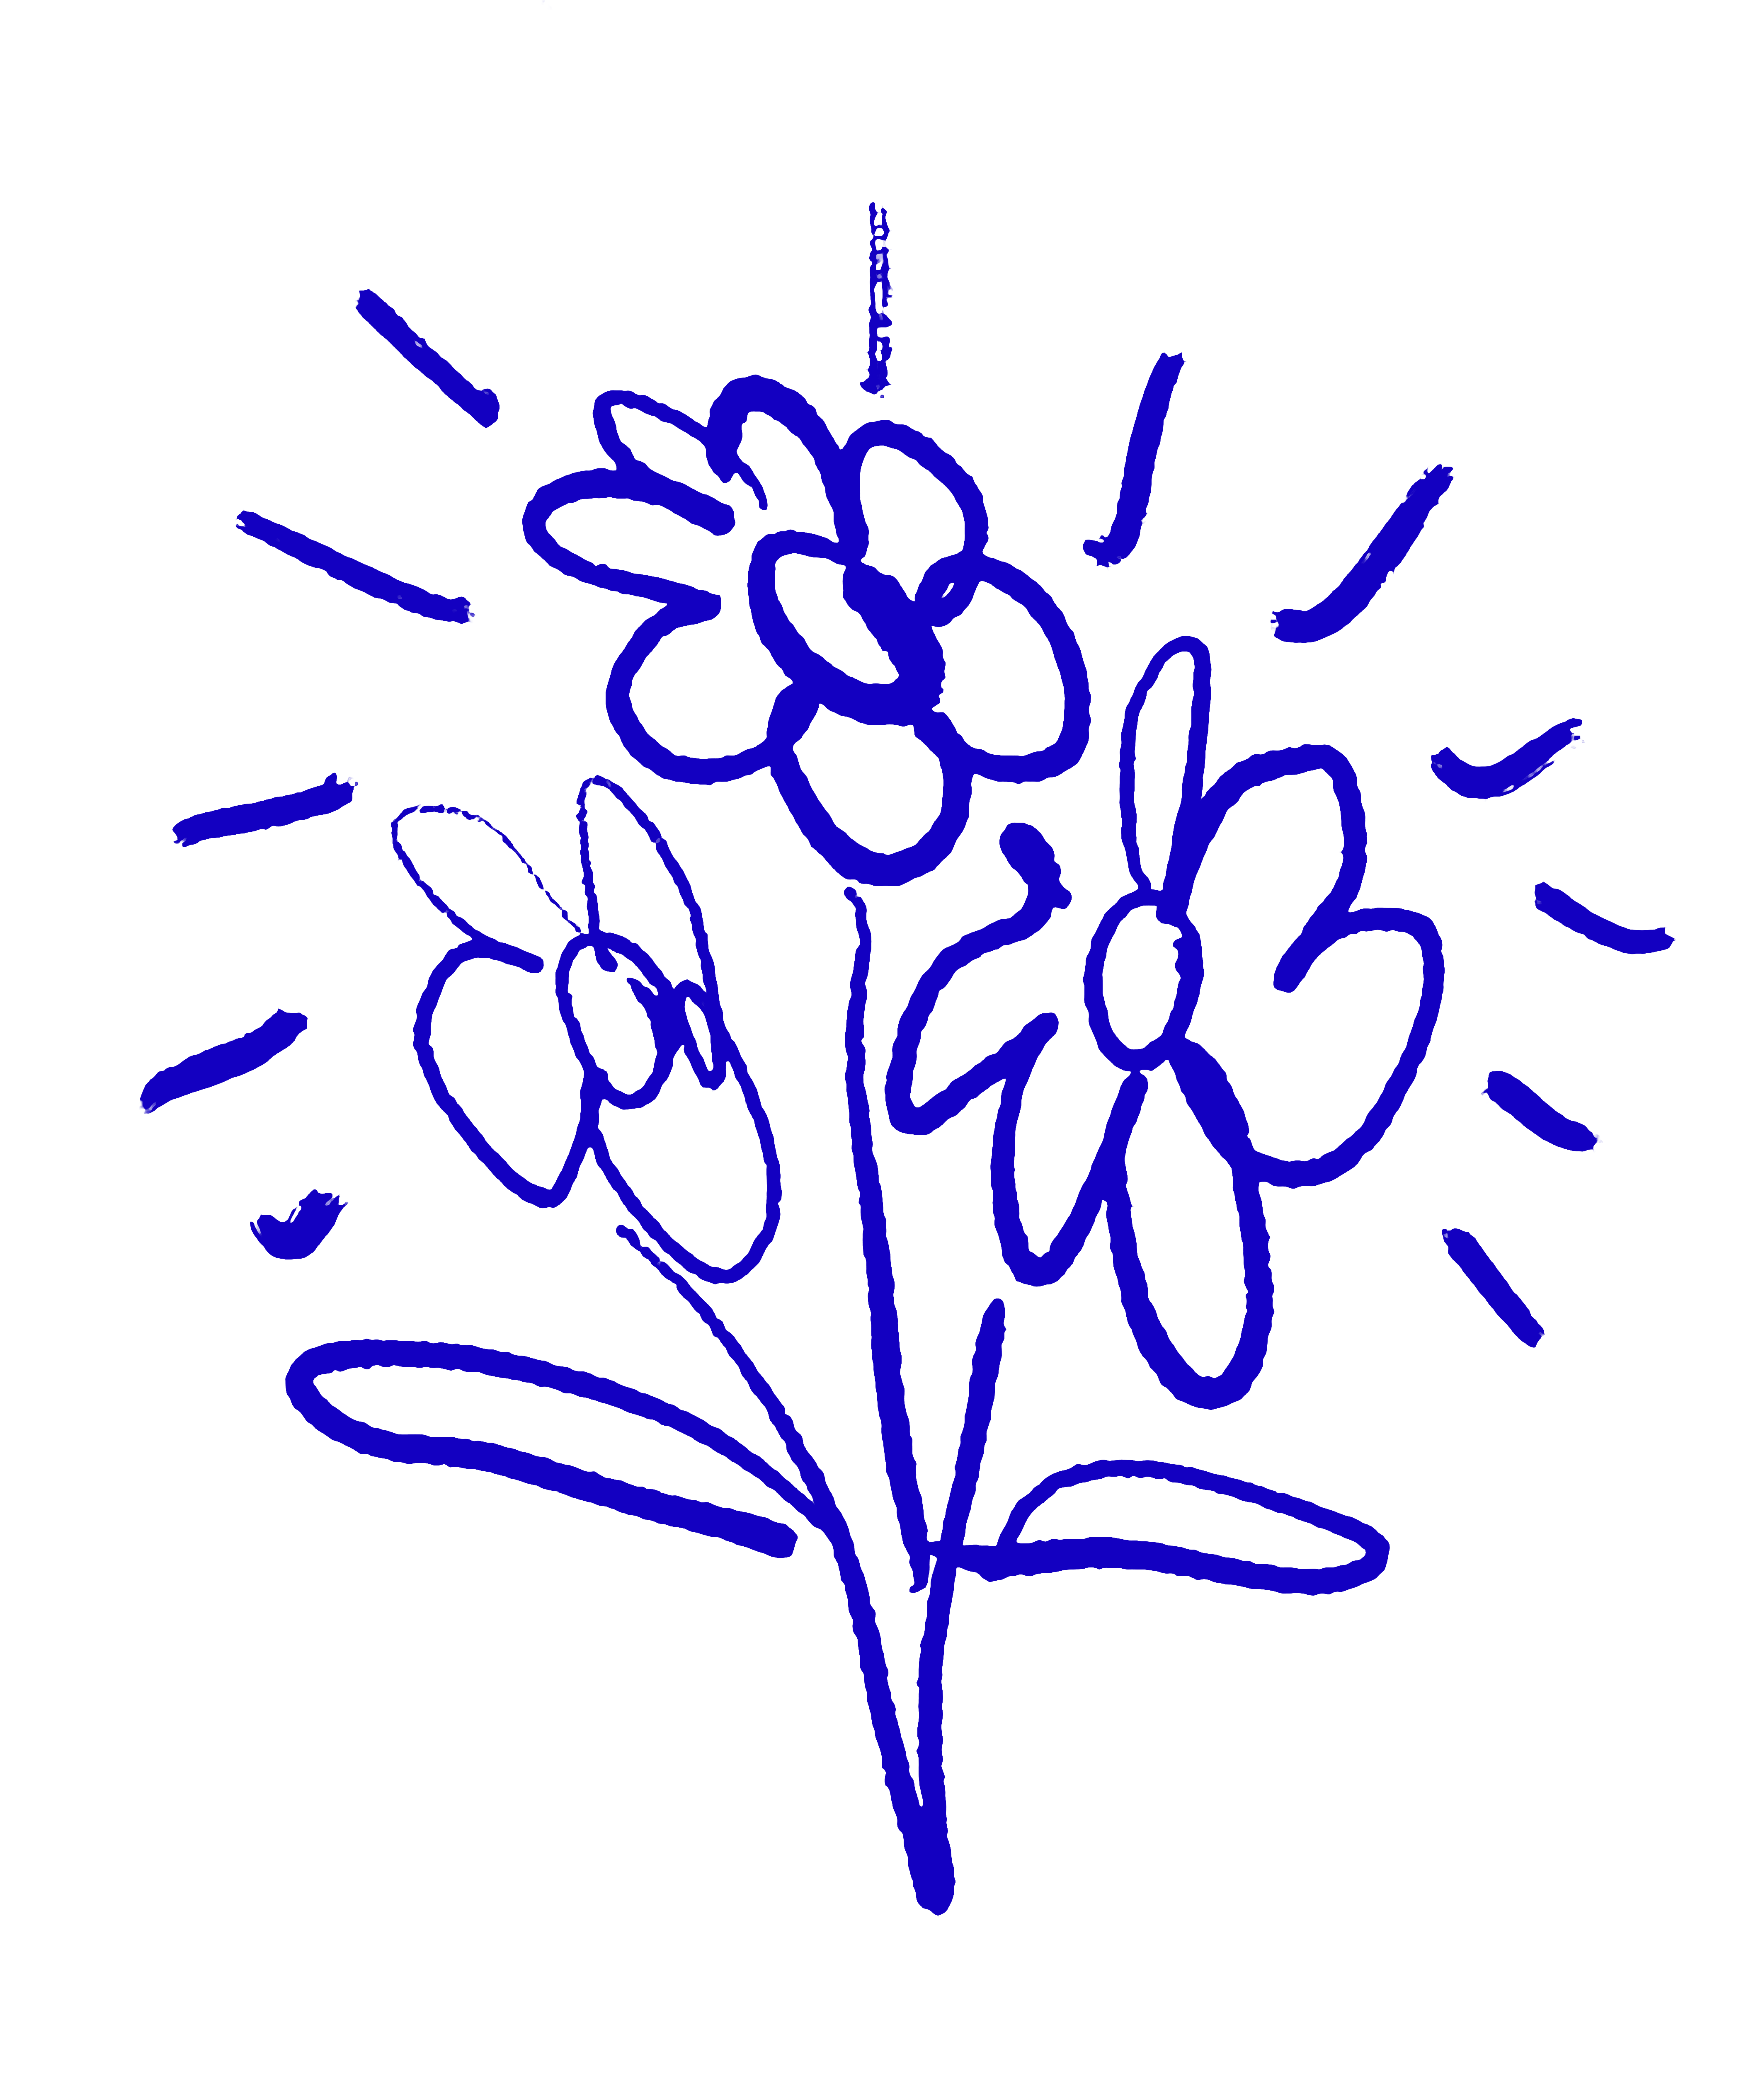 Blue flowers 